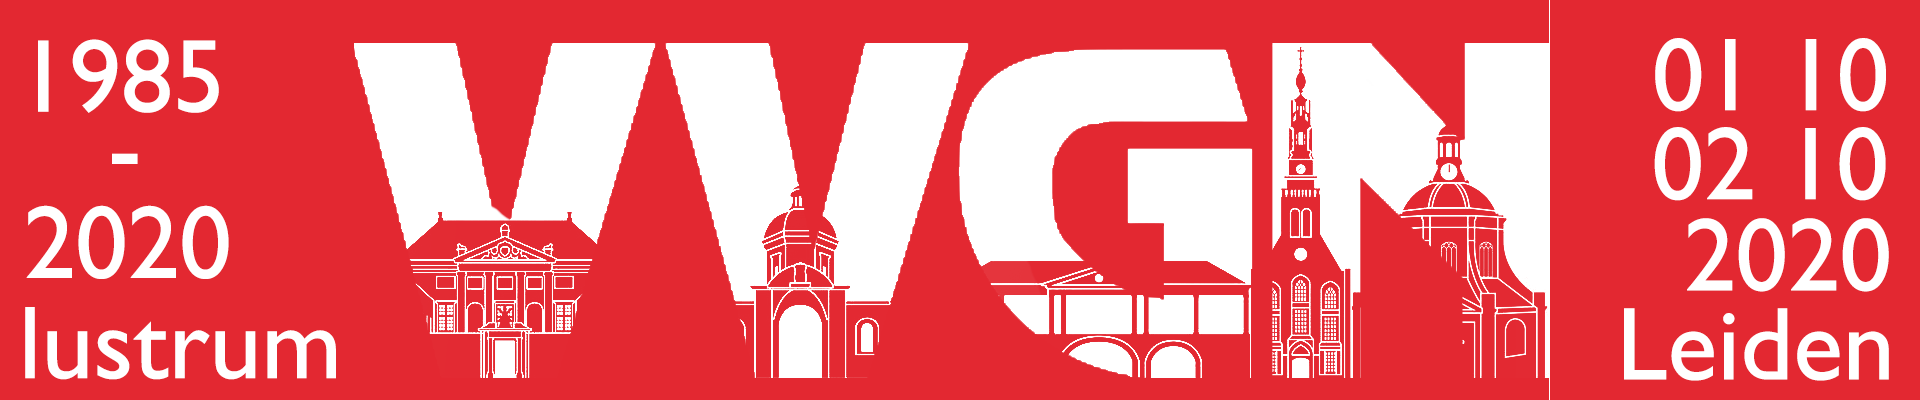 VVGN Lustrumcongres 2020 - cancelled